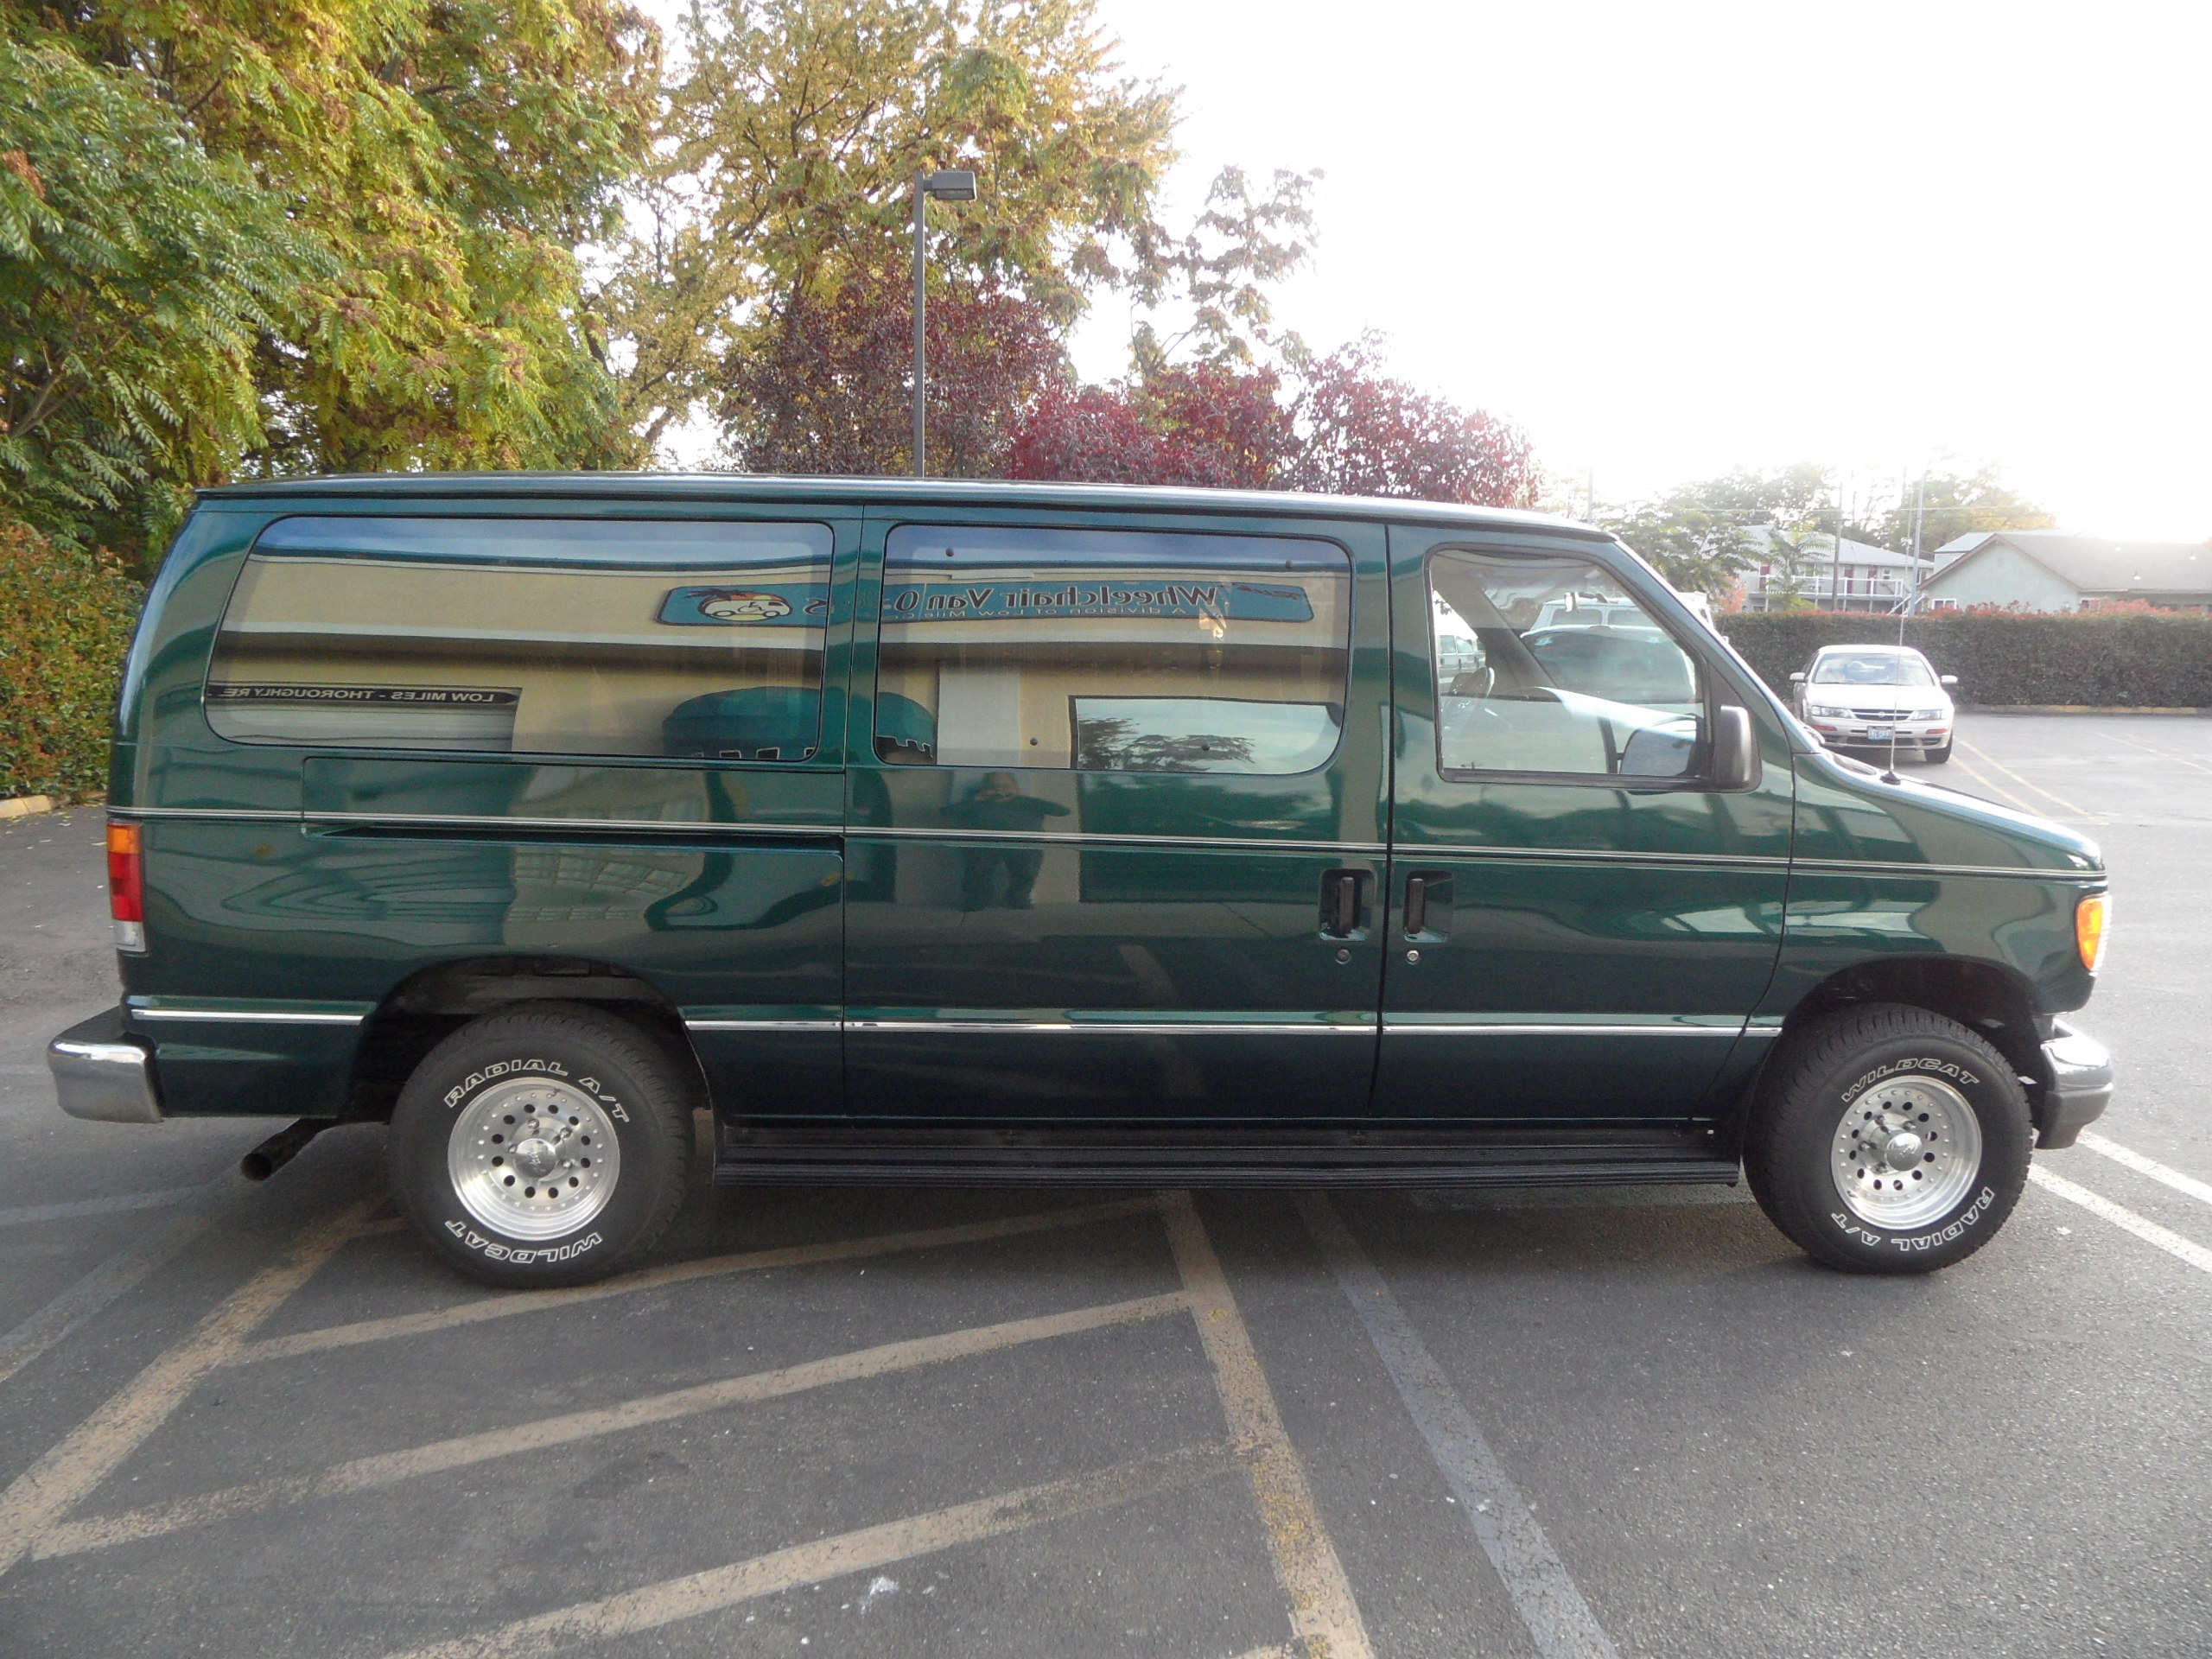 Image result for green ford van, images